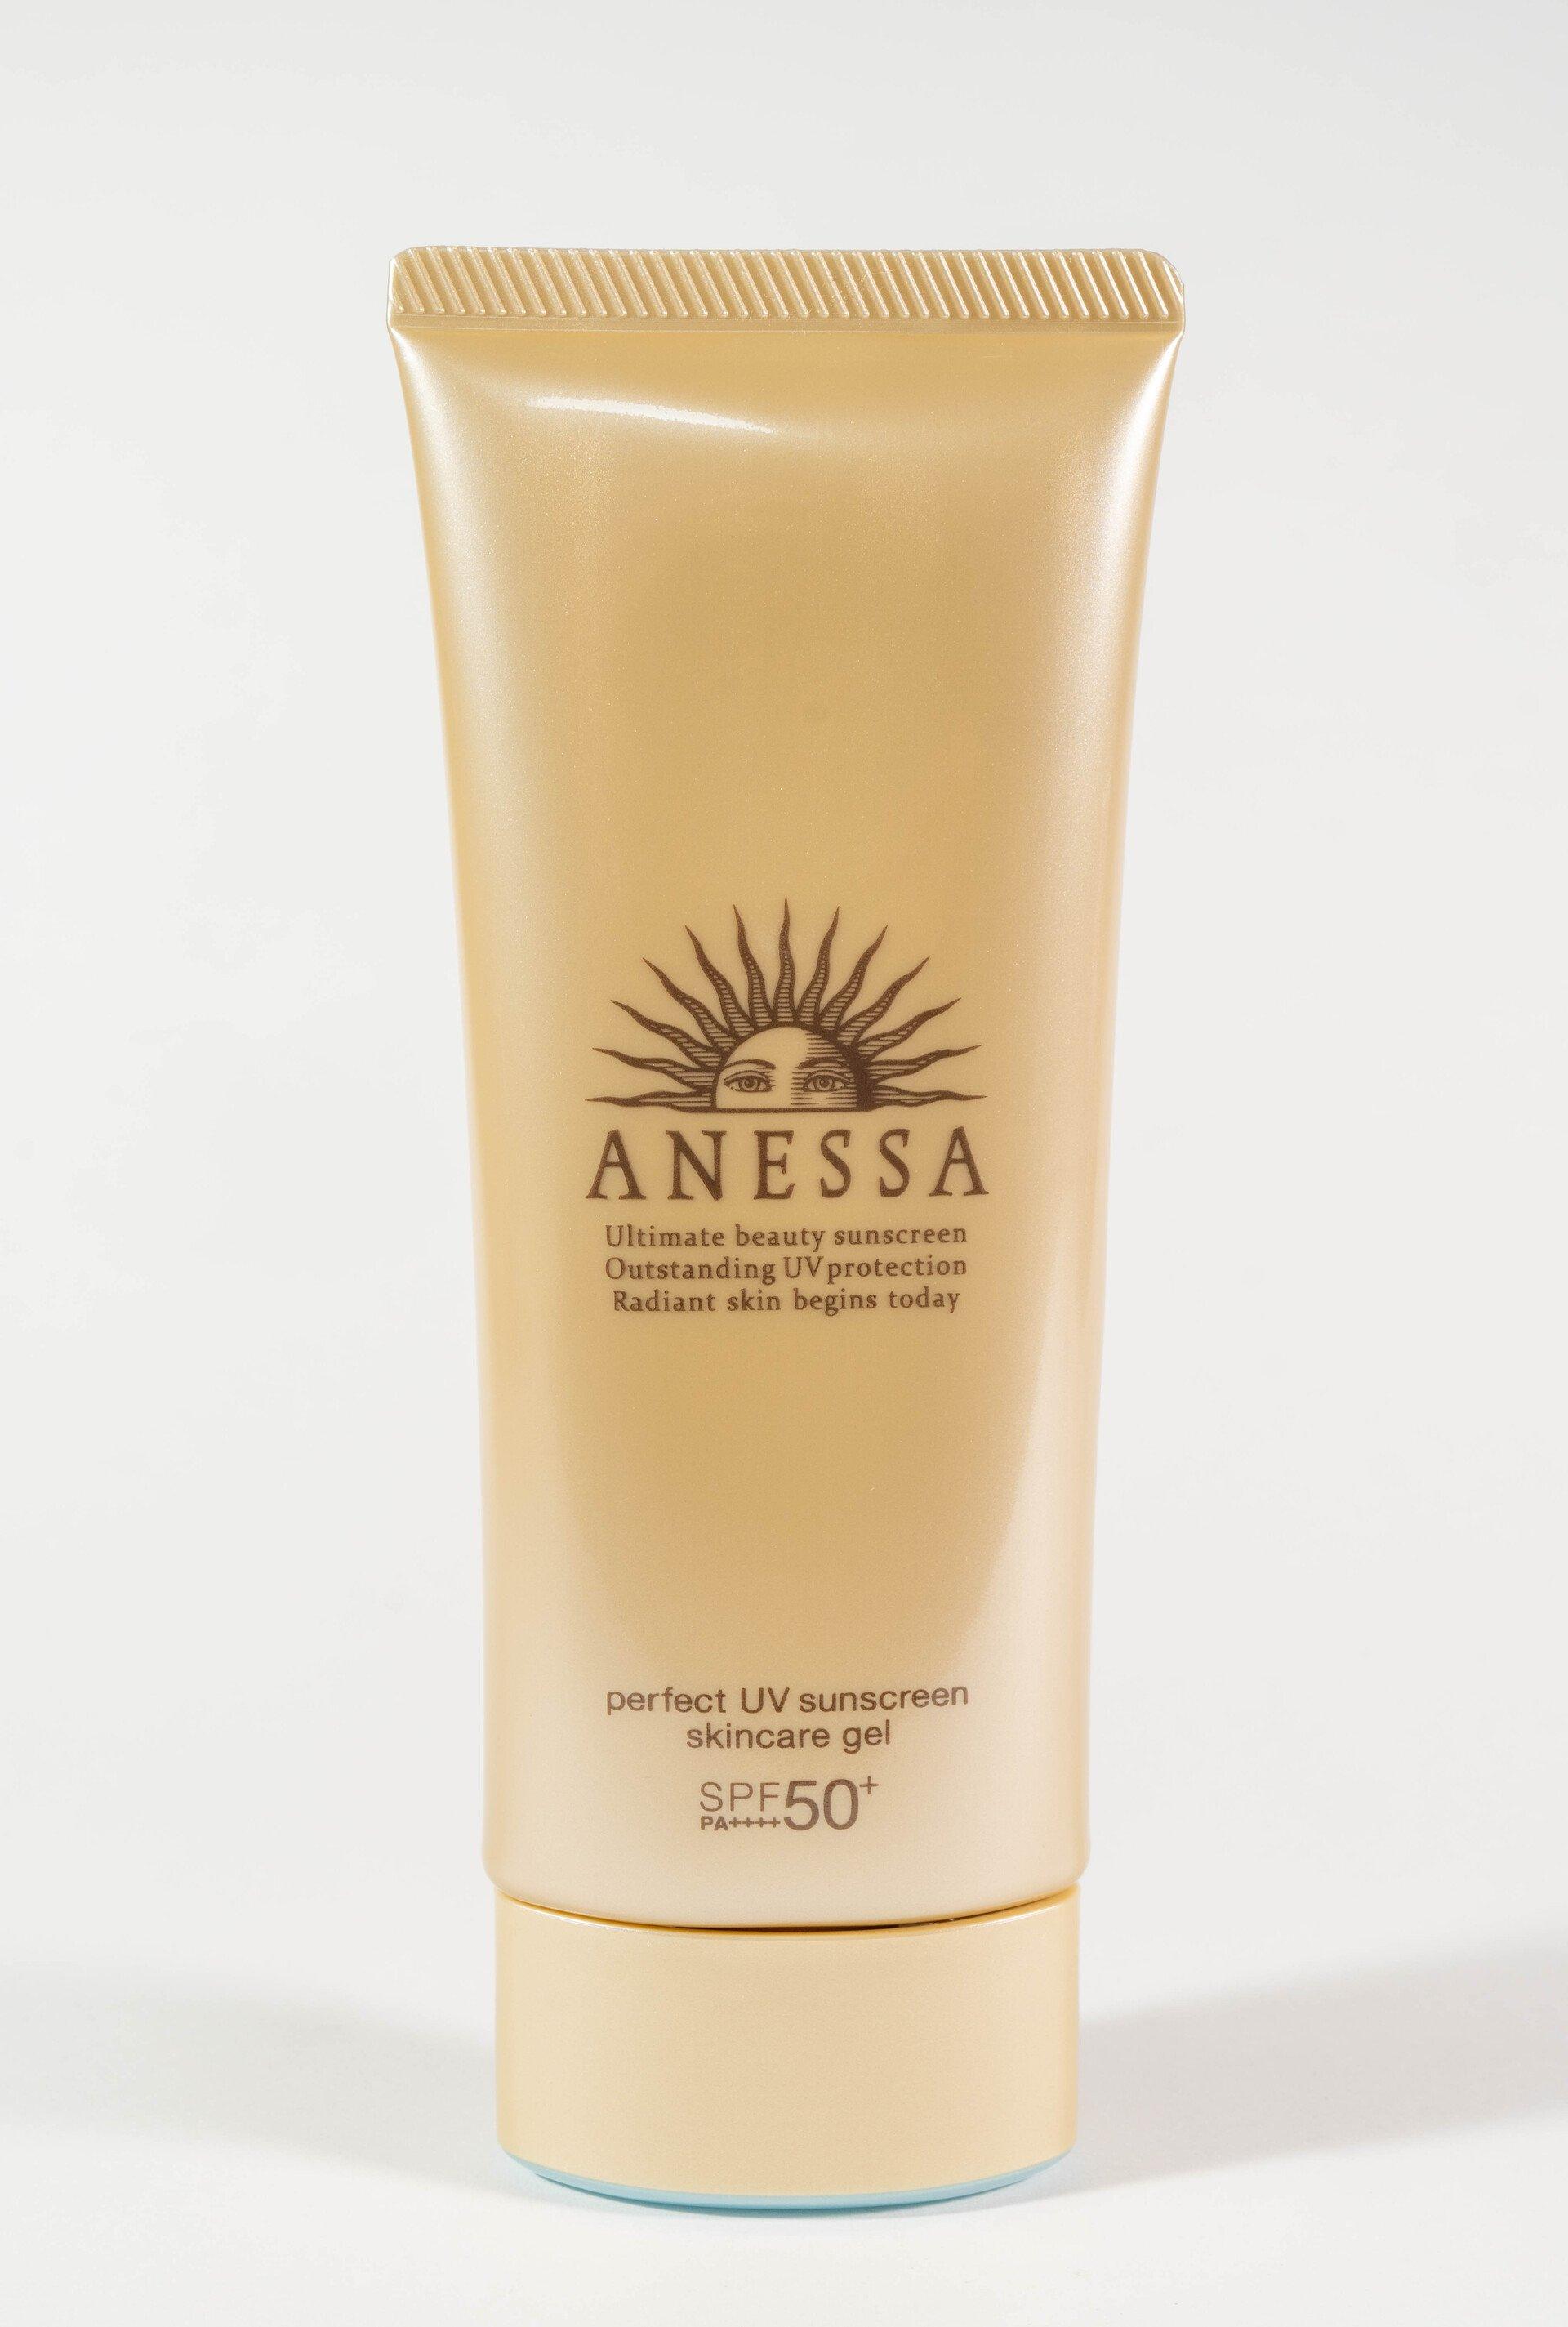 SHISEIDO Anessa Perfect Uv Sunscreen Skincare Gel Spf50+/Pa++++ 90ml